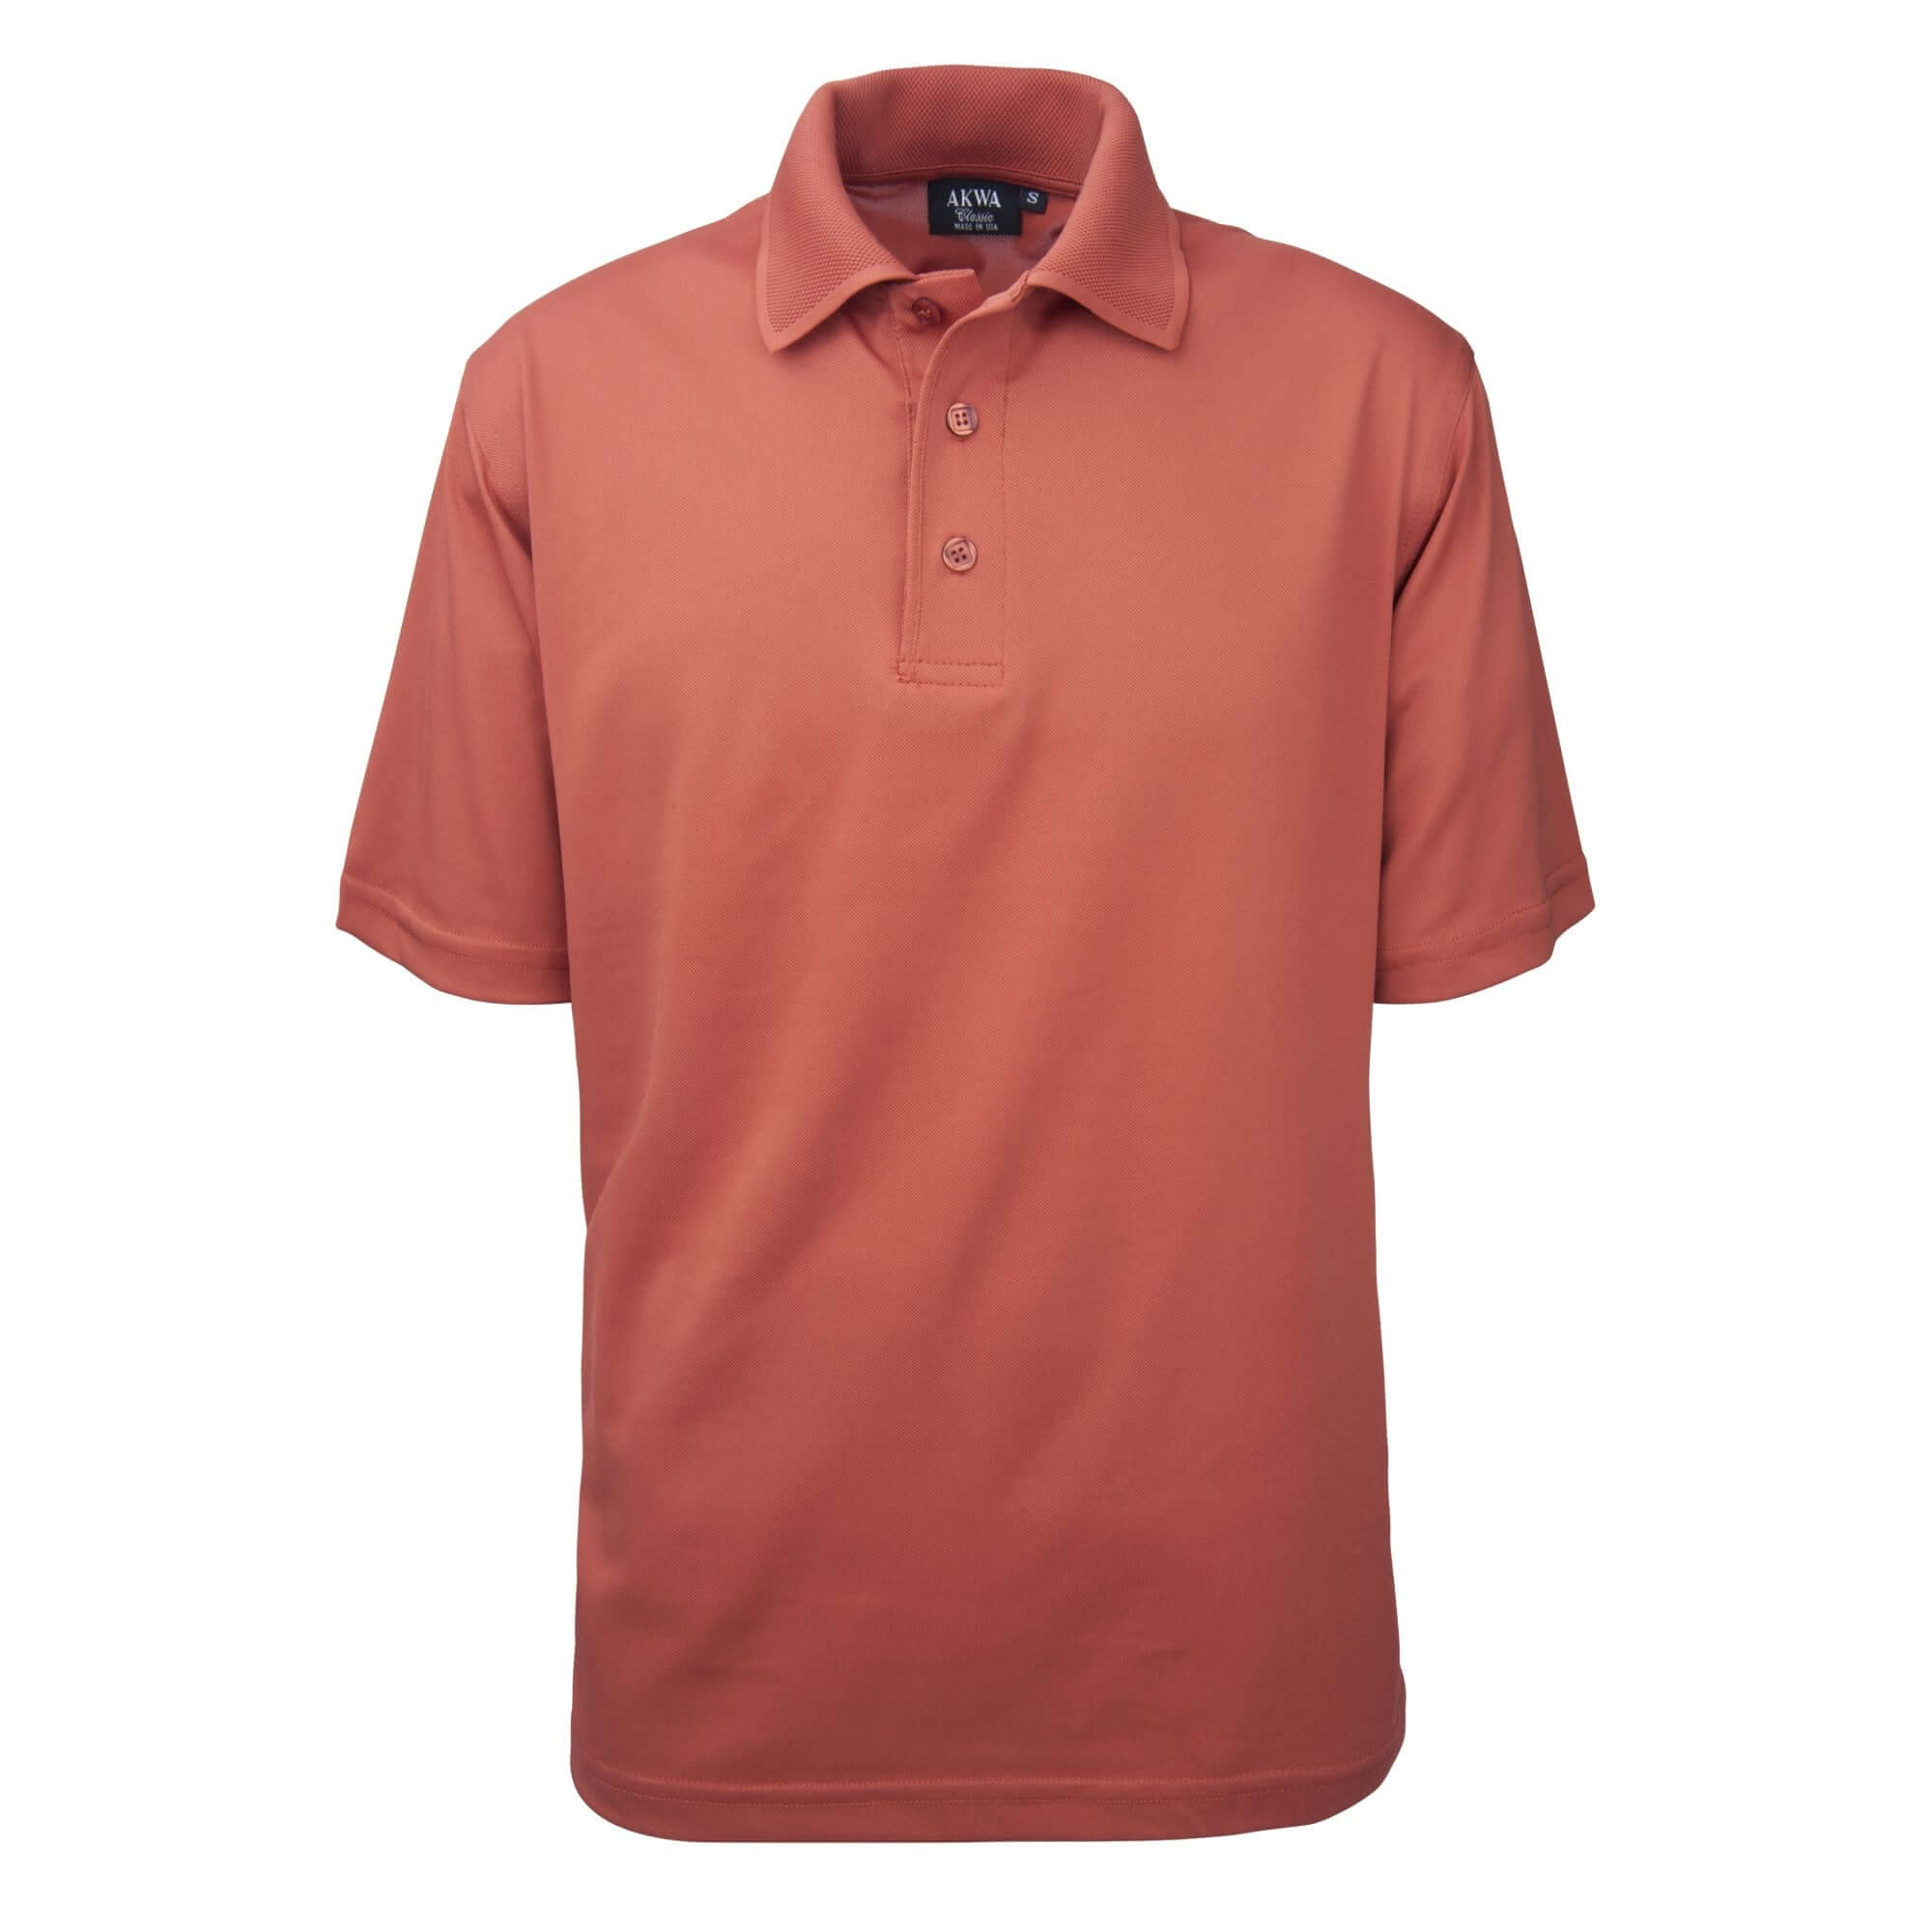 Men's Made in USA Tech Polo Shirt color_rust - the flag shirt